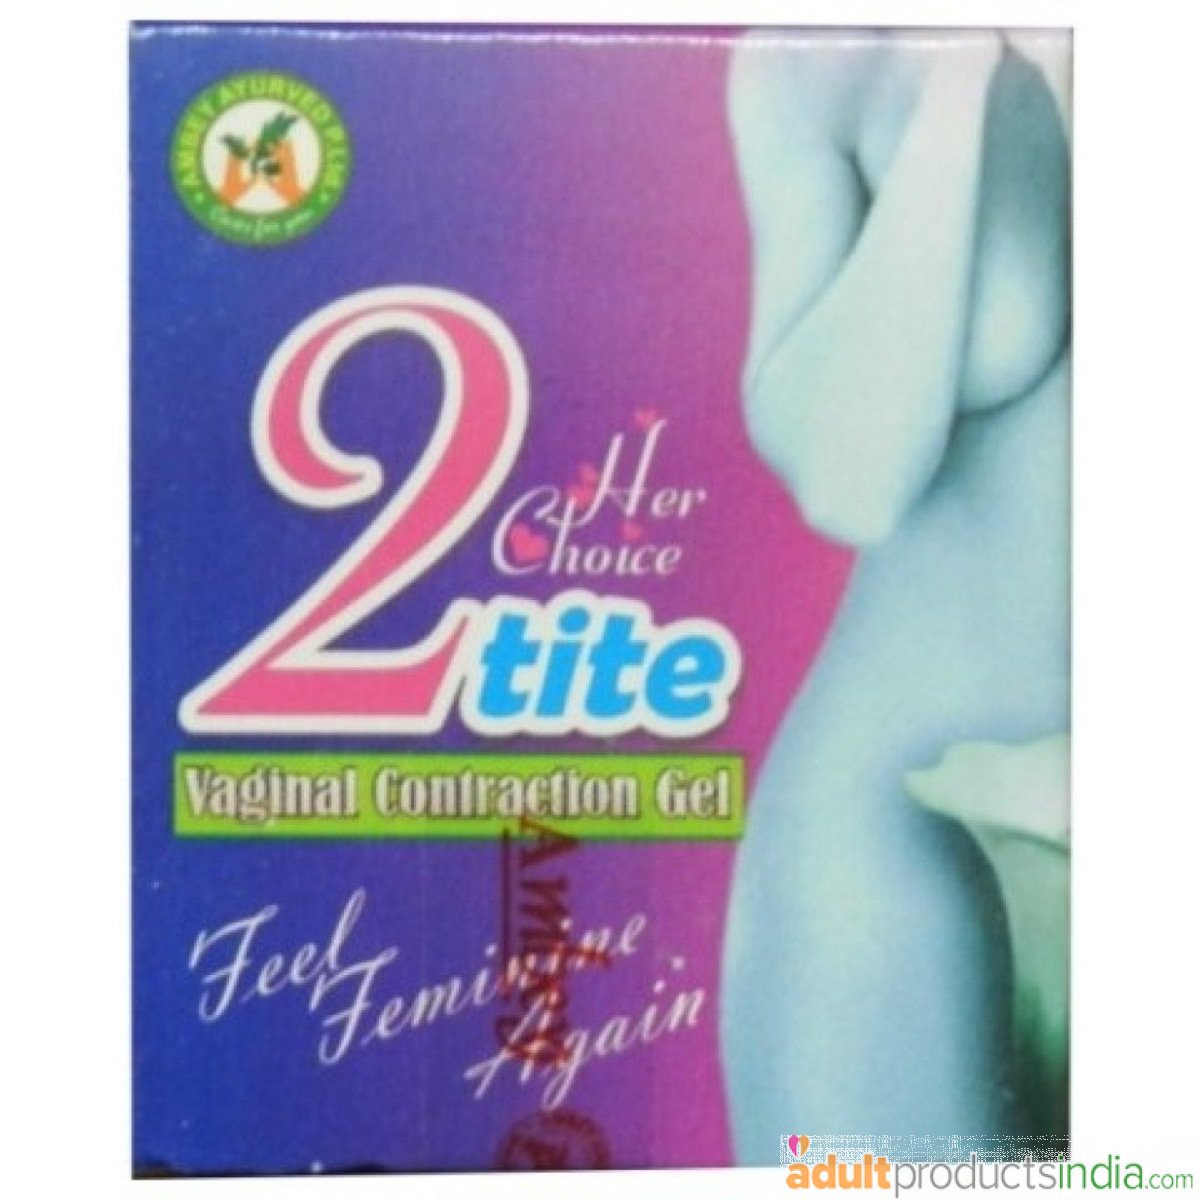 2Tite Vaginal Tightening And Rejuvenating Gel